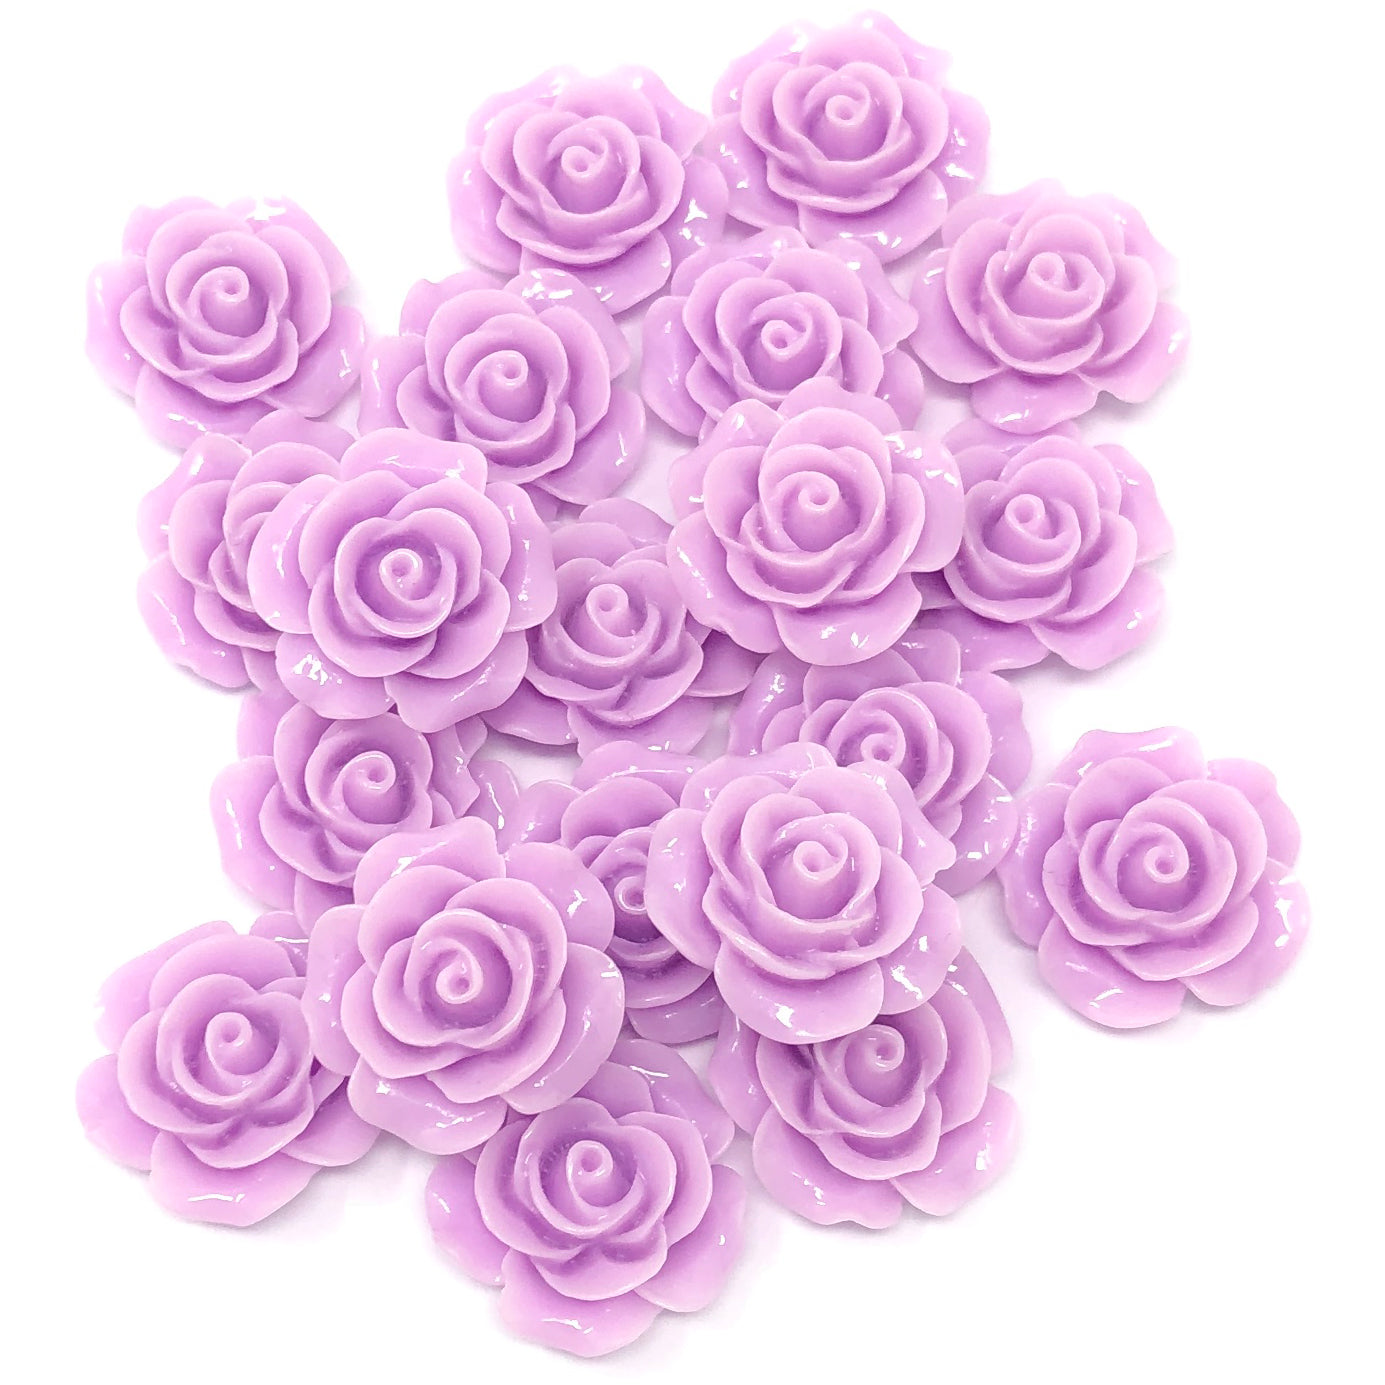 Lilac 20mm Resin Roses Flatbacks - Pack of 20